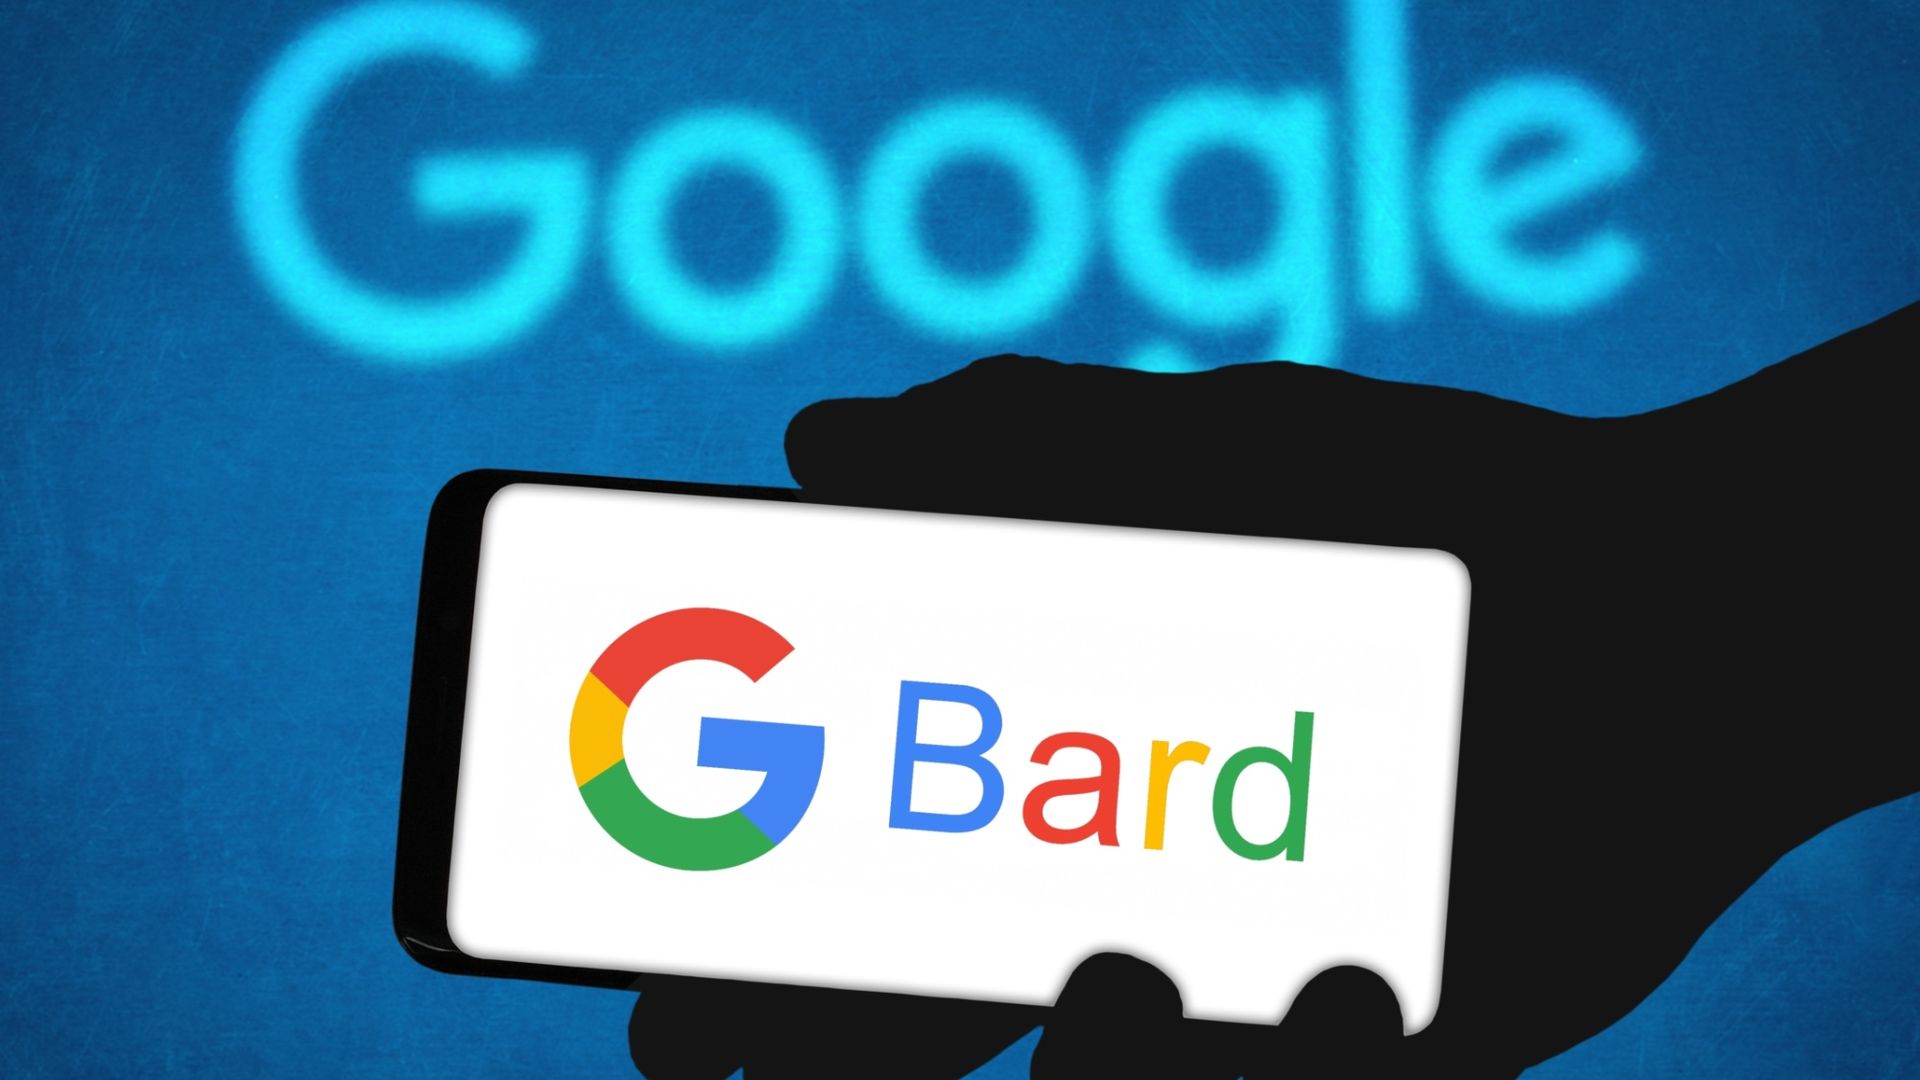 Google Bard not working 